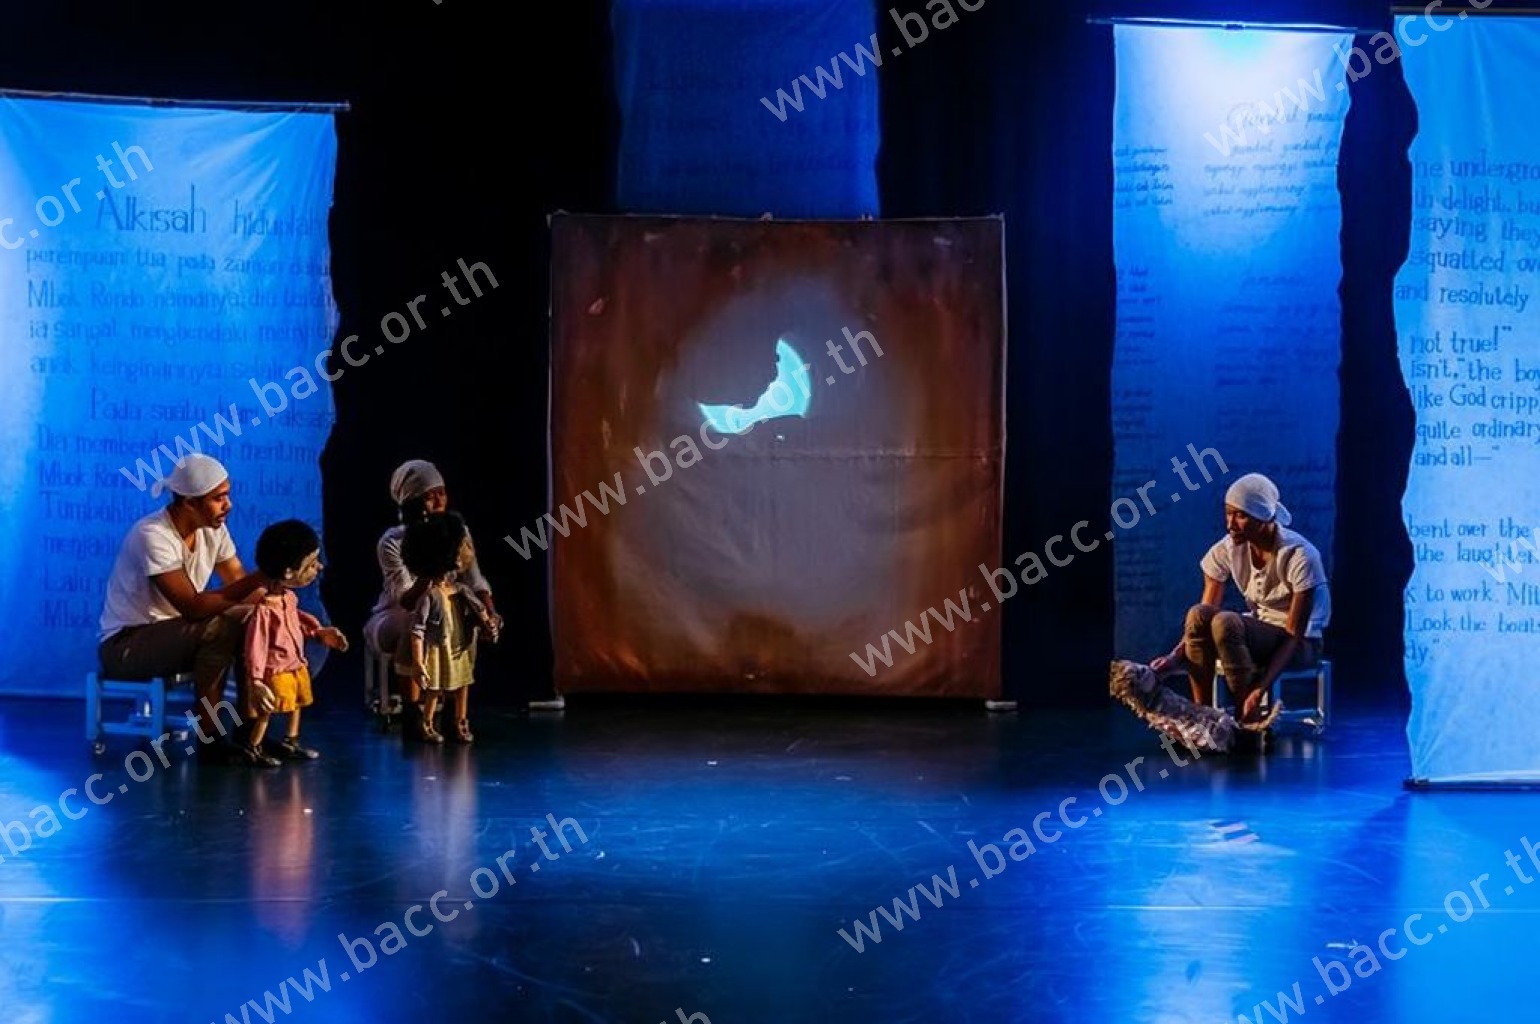 P.A.F. : Performative Art Festival # 5 - Bangkok International Children’s Theatre Festival